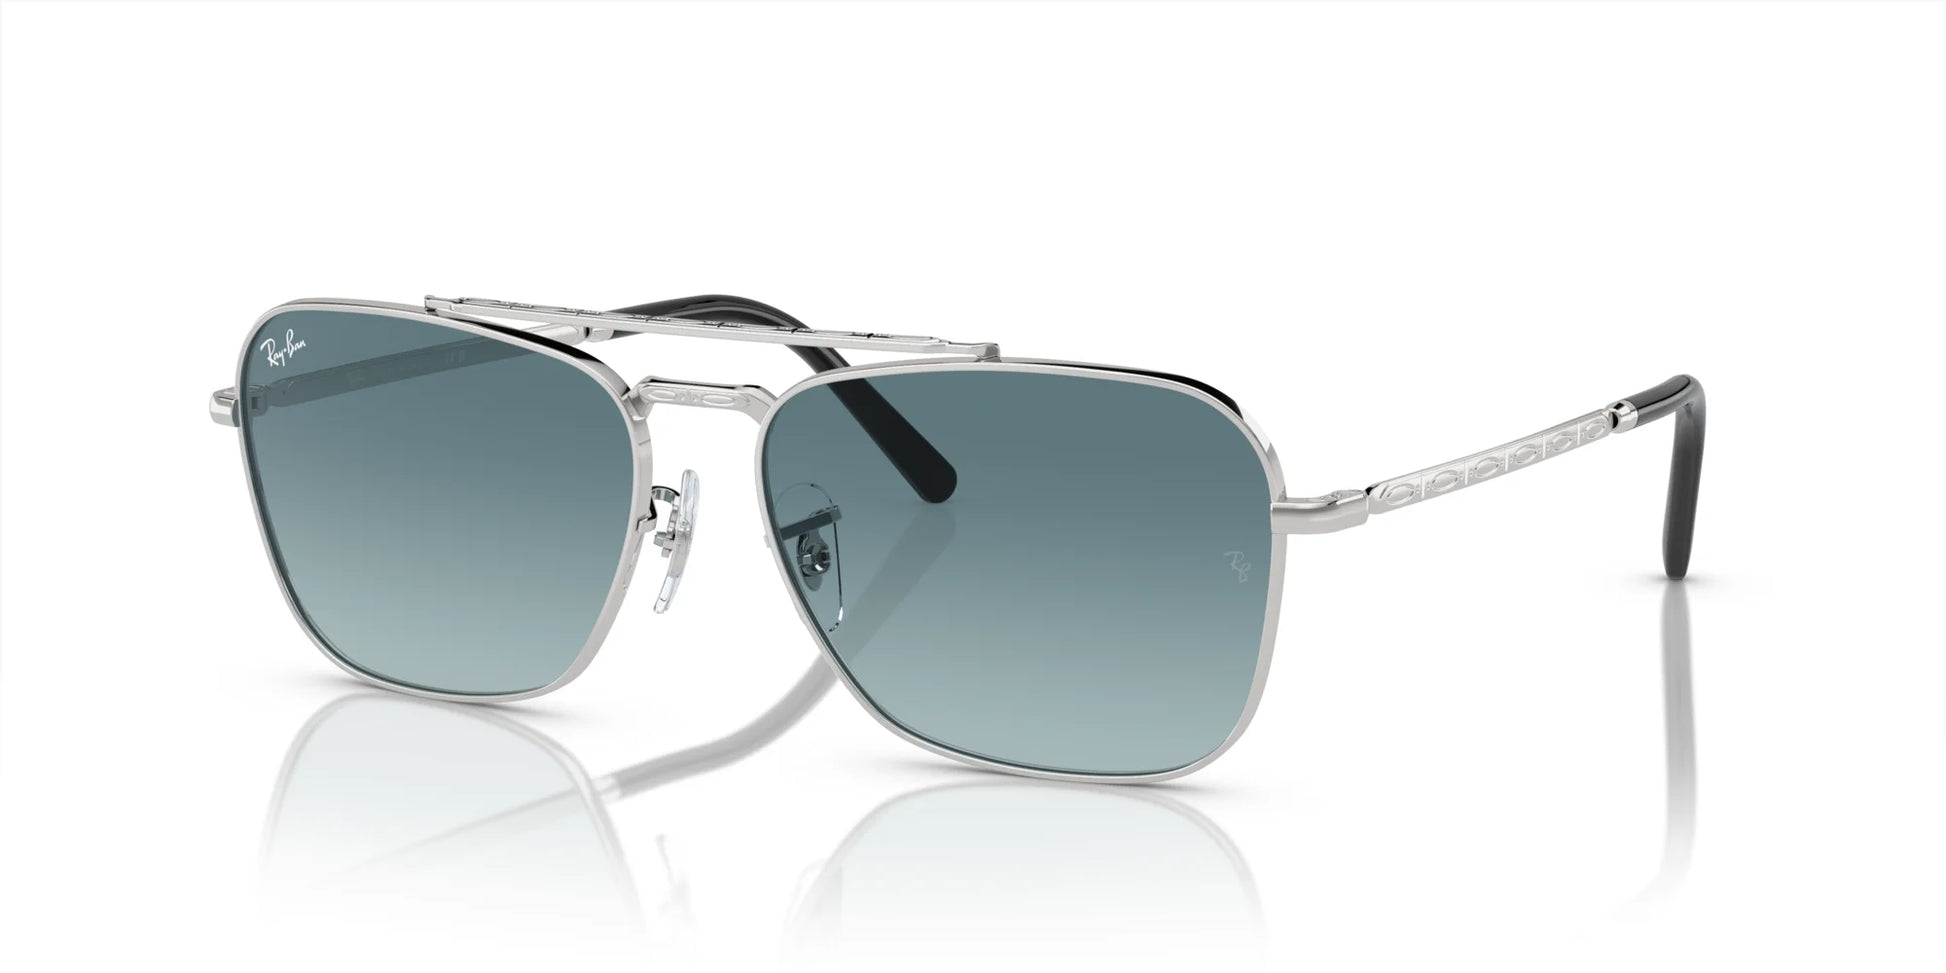 Ray-Ban NEW CARAVAN RB3636 Sunglasses Silver / Blue / Grey